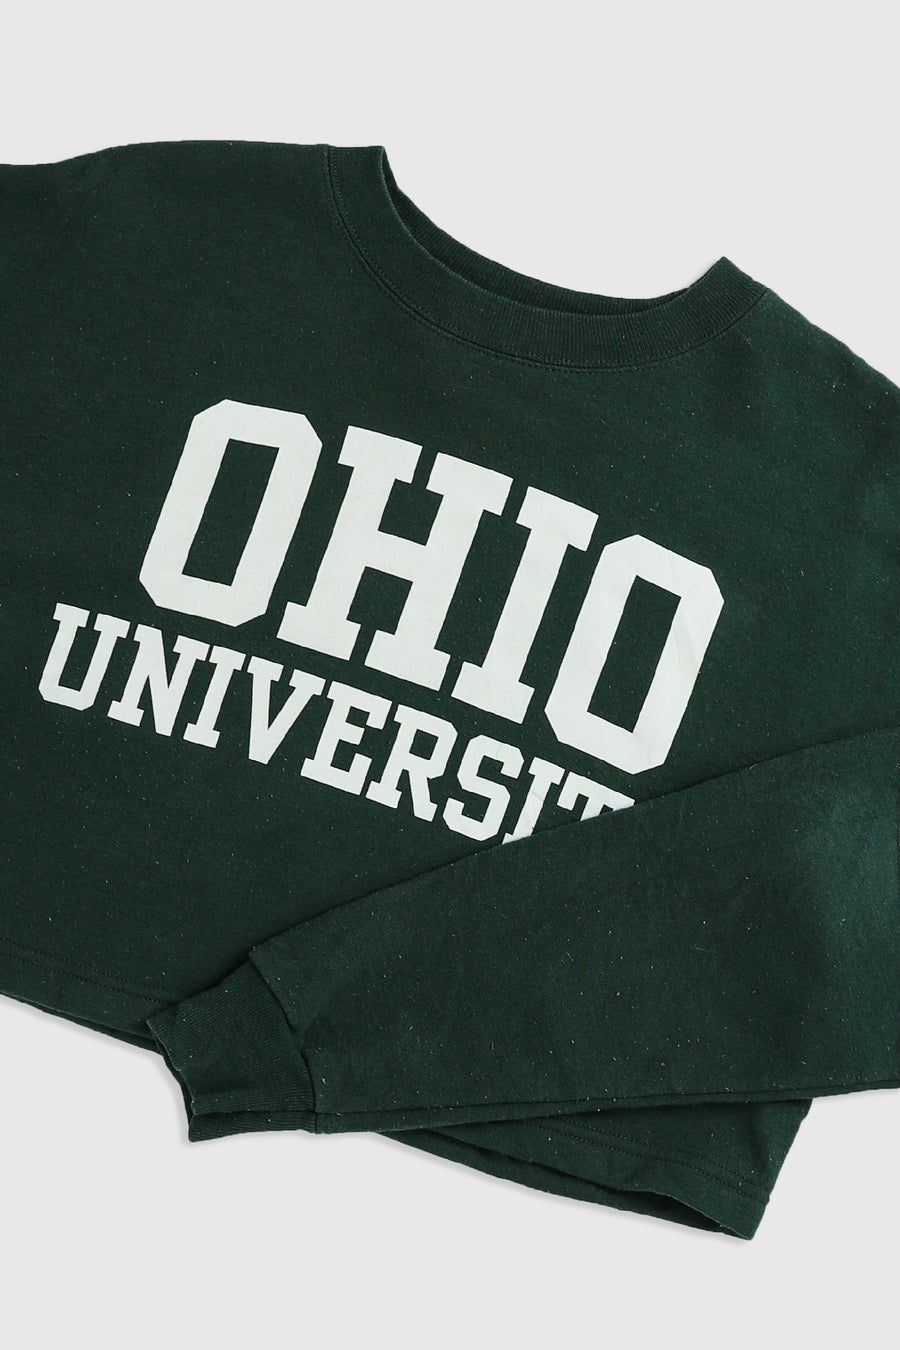 Rework Ohio University Crop Sweatshirt - M